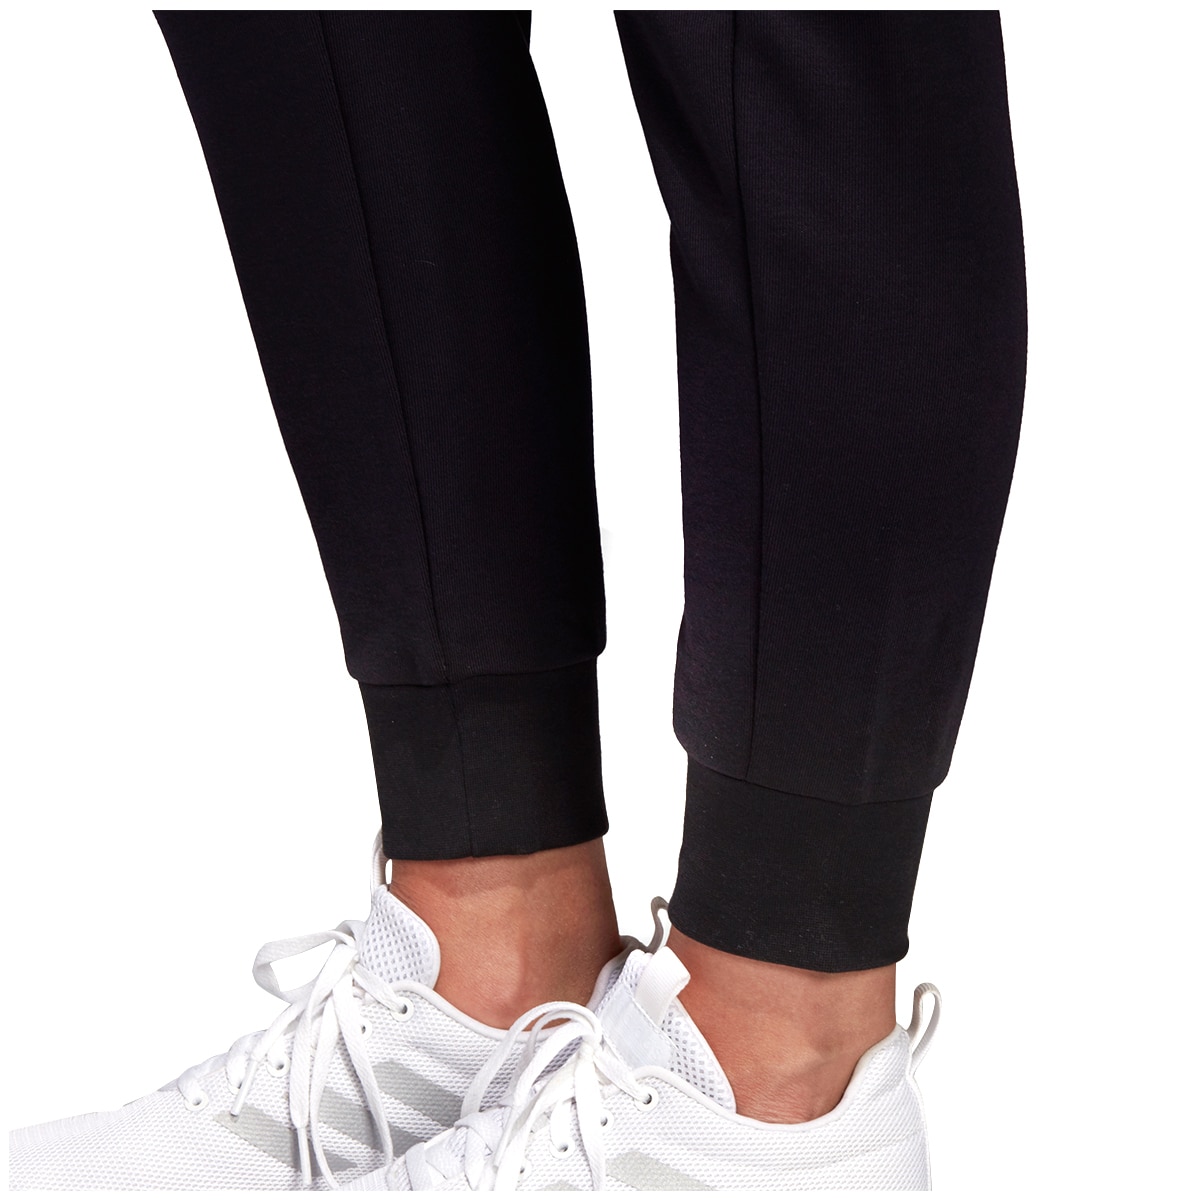 Adidas Plain Track Pant - Black